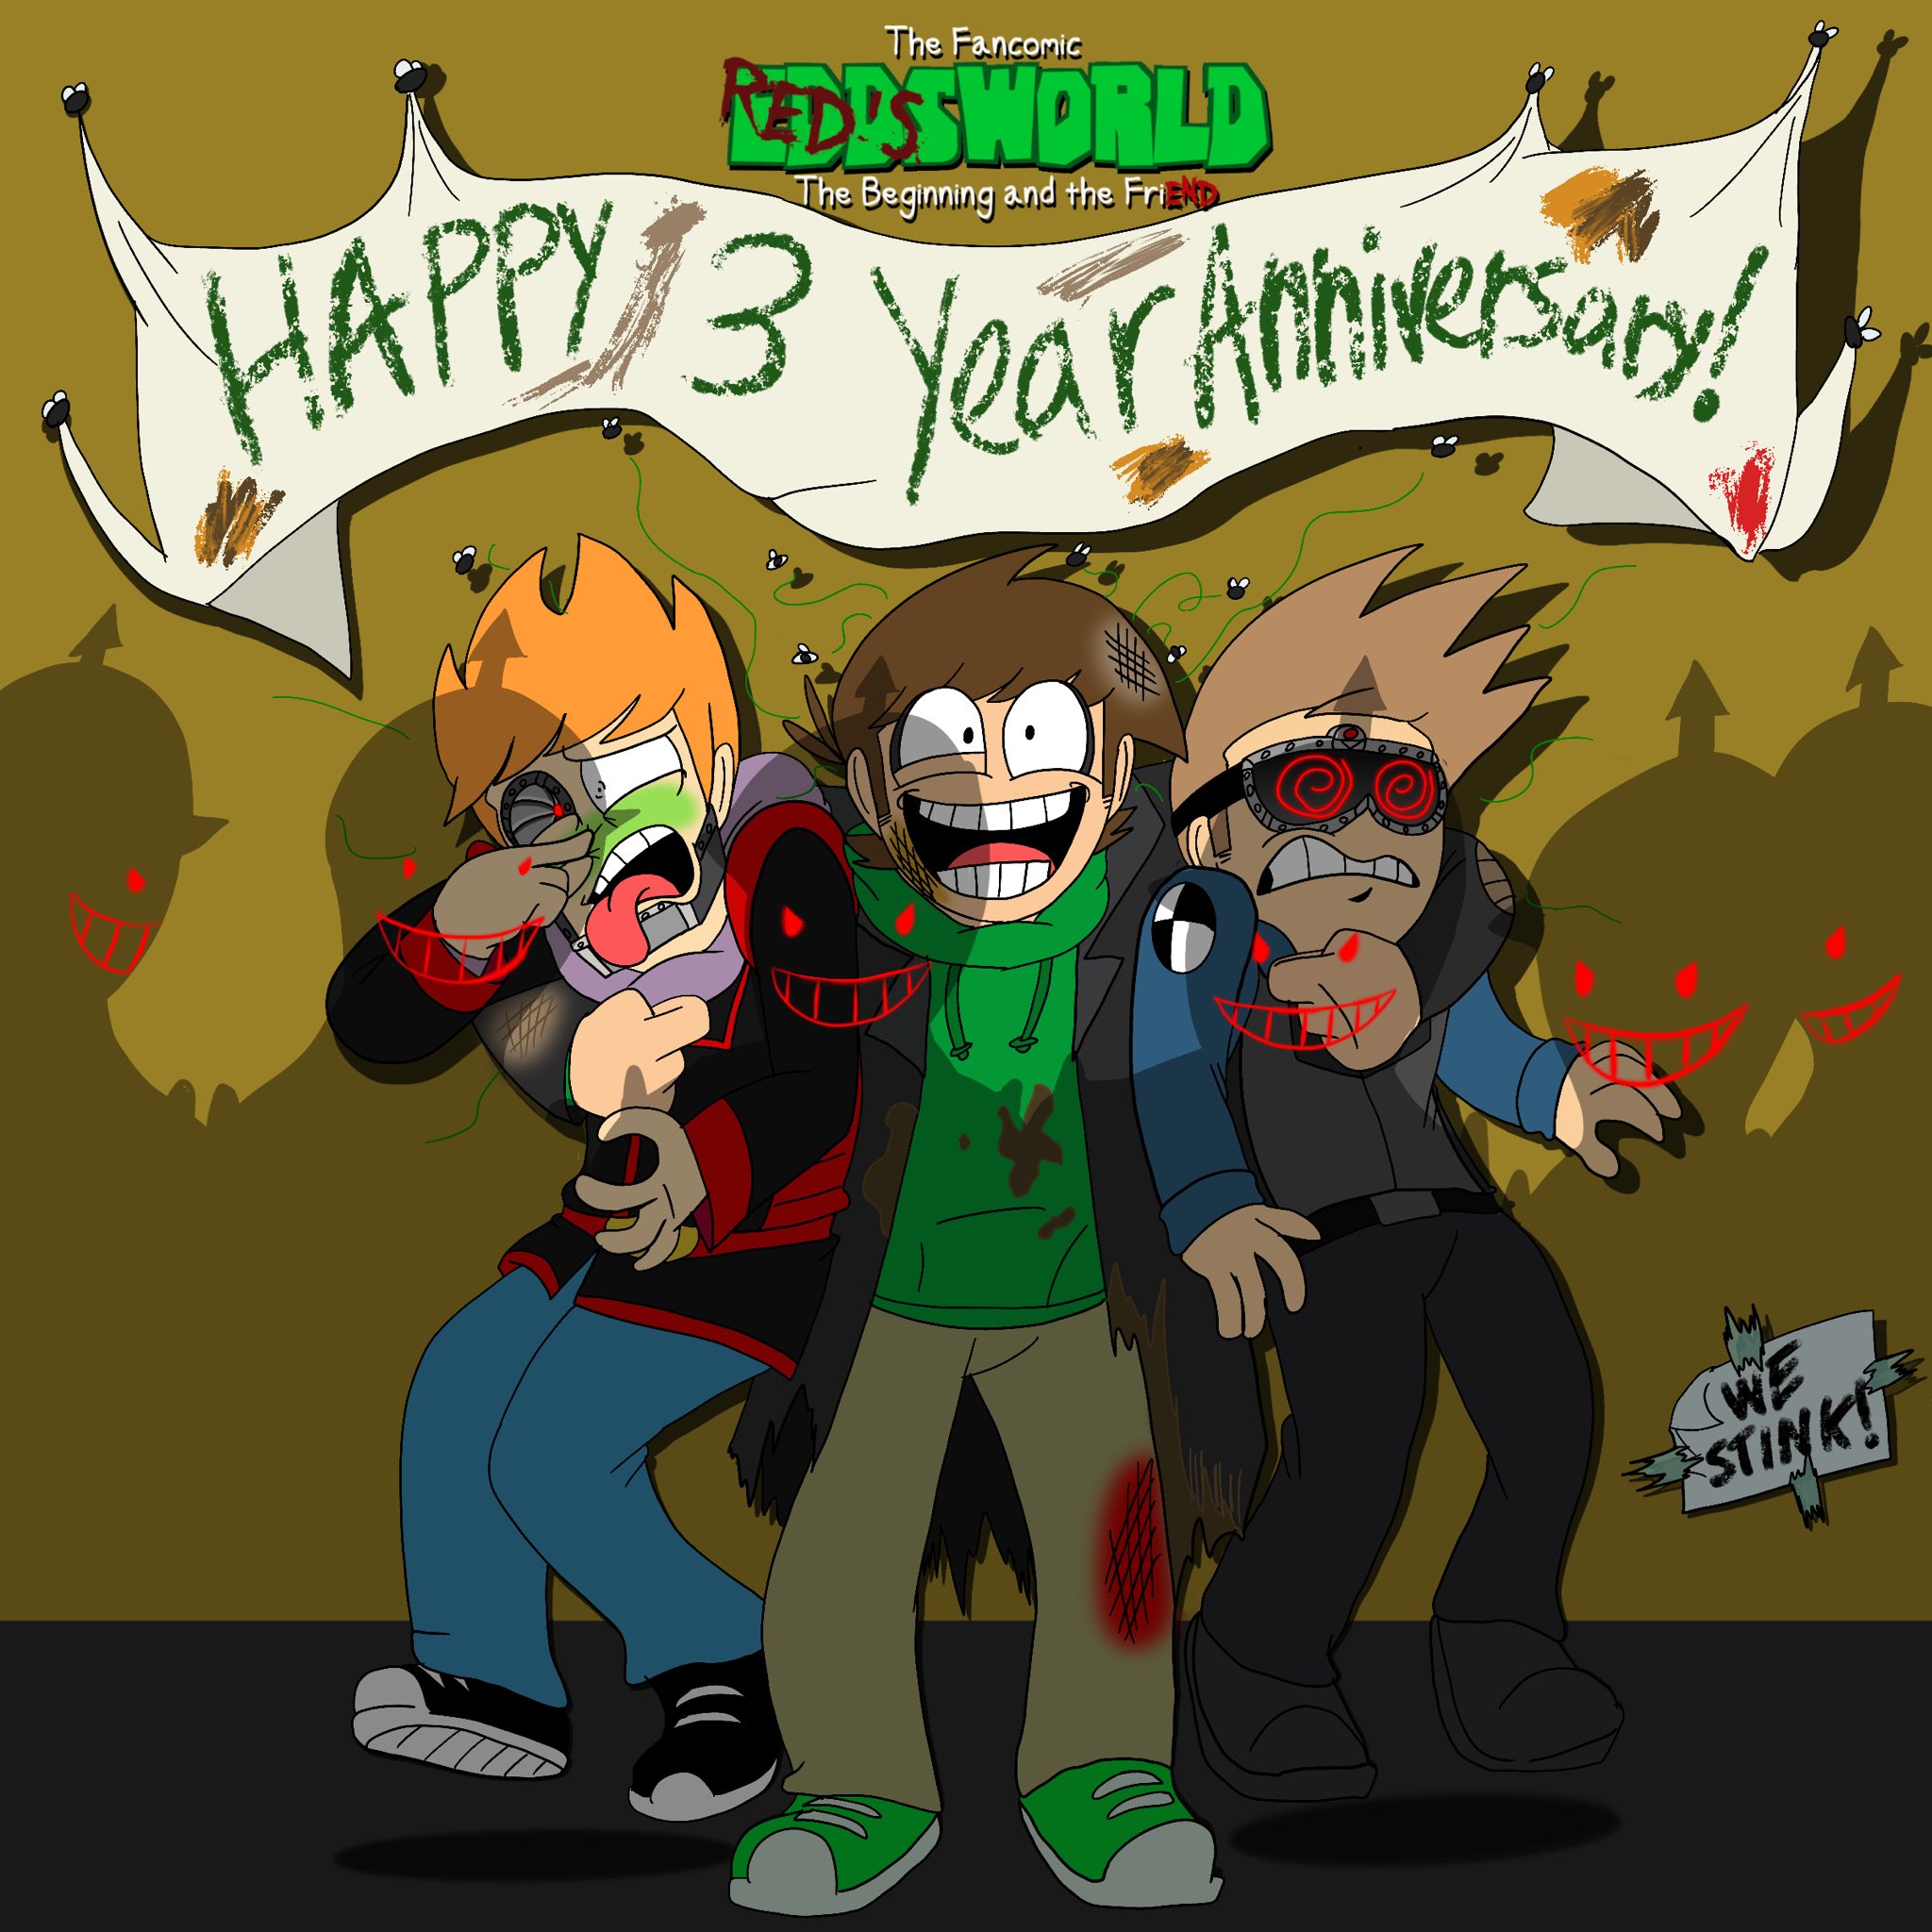 Eddsworld: Fancomic on X: Happy 14th Anniversary @Eddsworld ! We